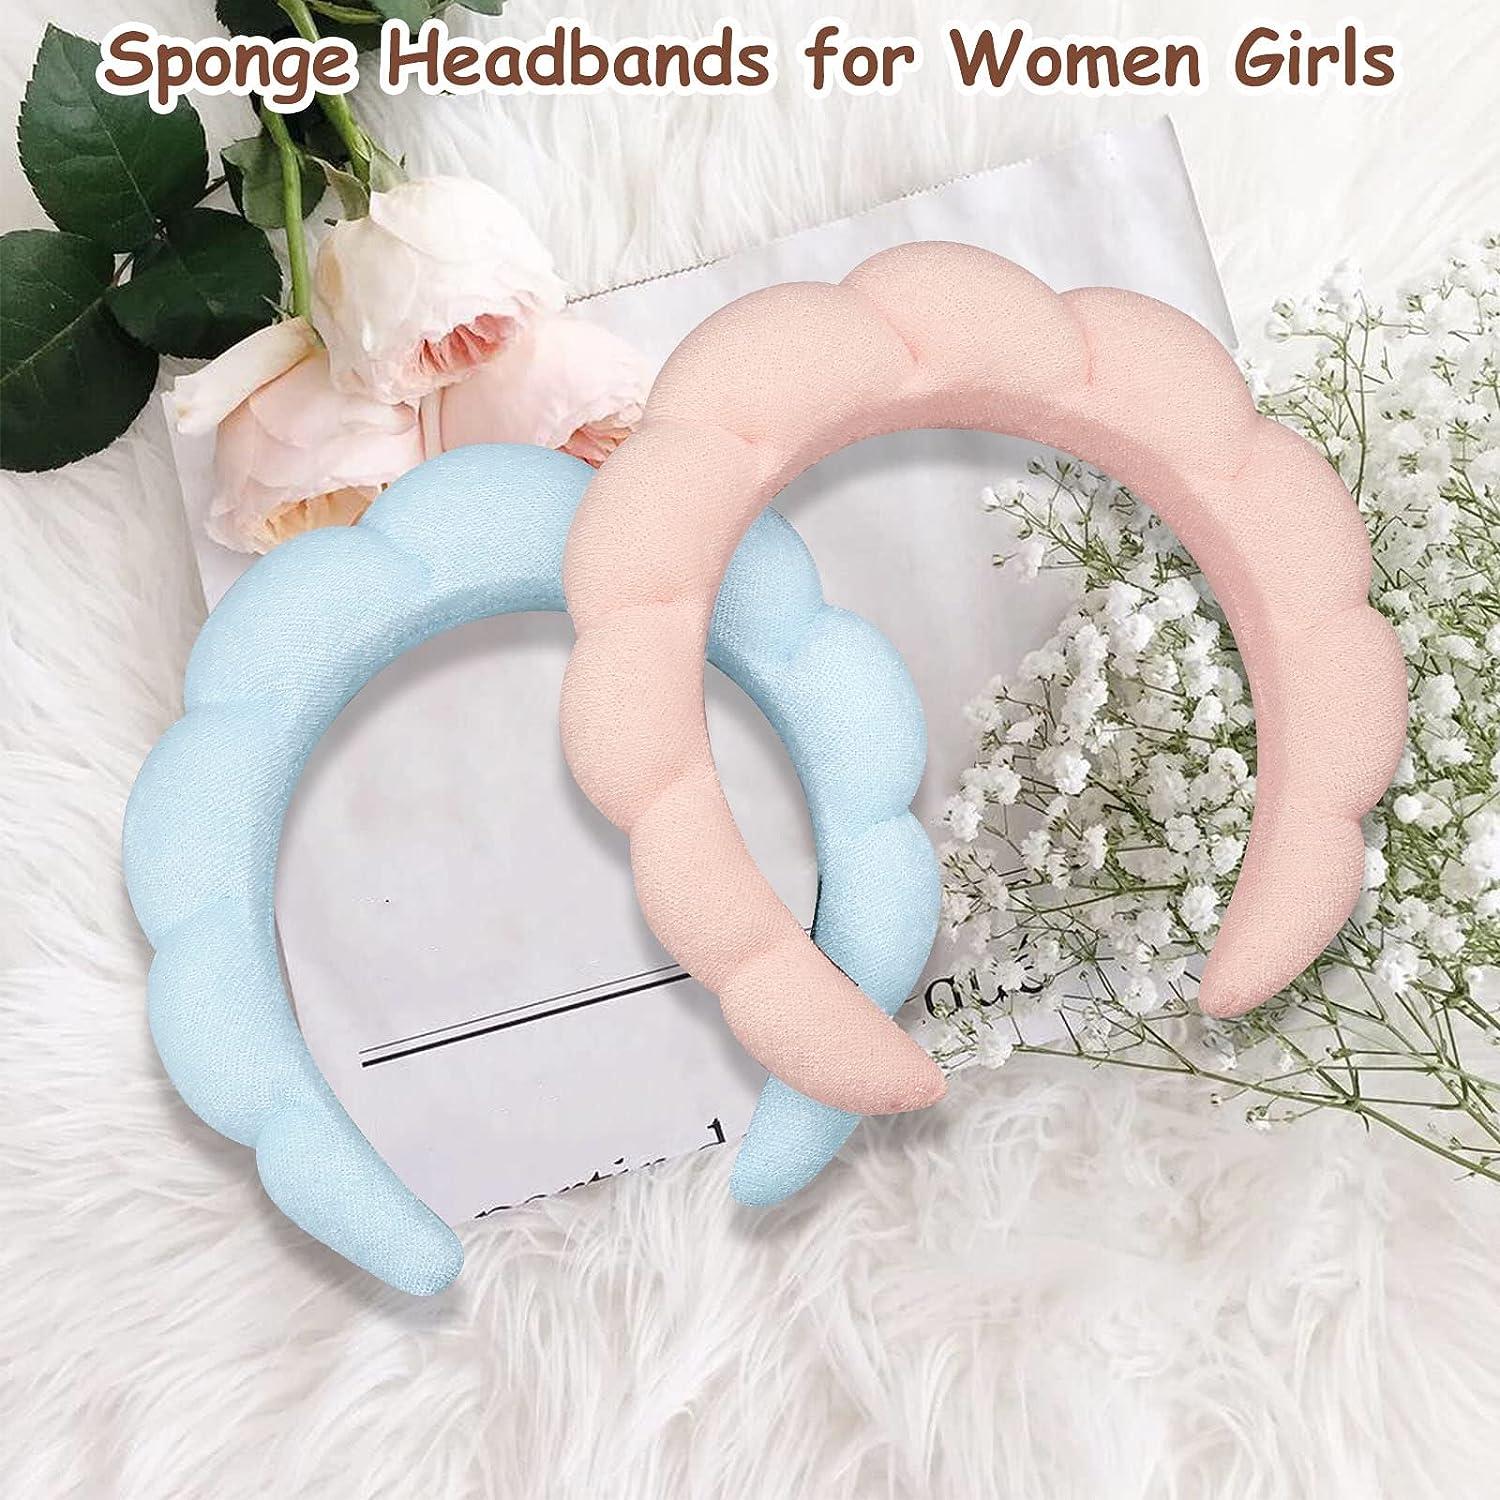 2Pcs Spa Headband for Washing Face Sponge Headbands for Women